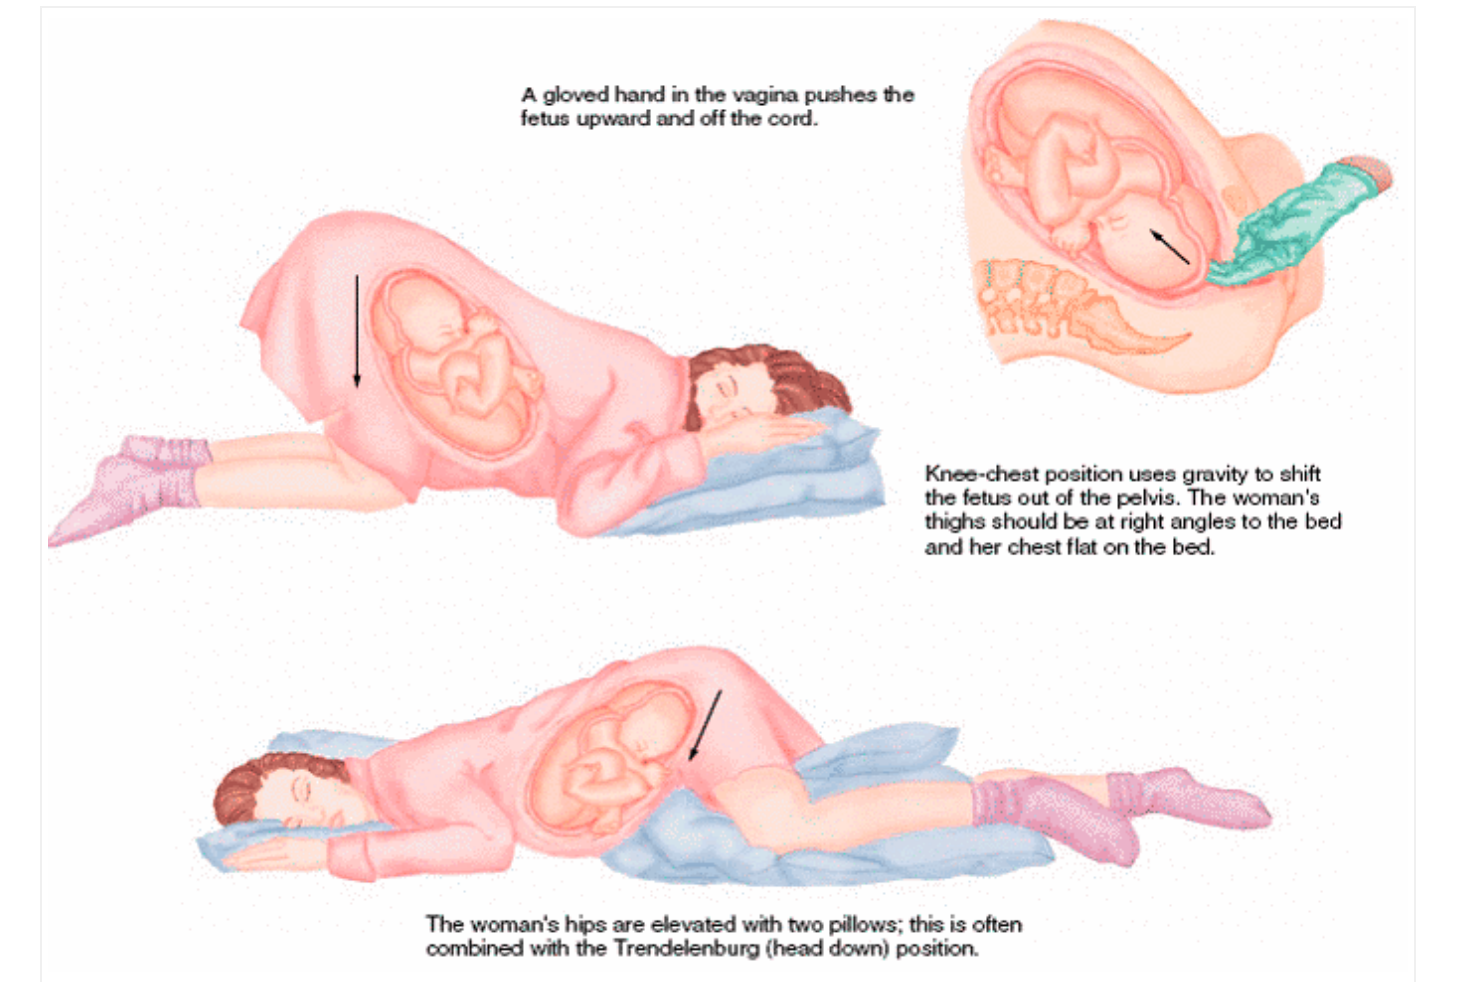 чем опасен оргазм при беременности во сне фото 15